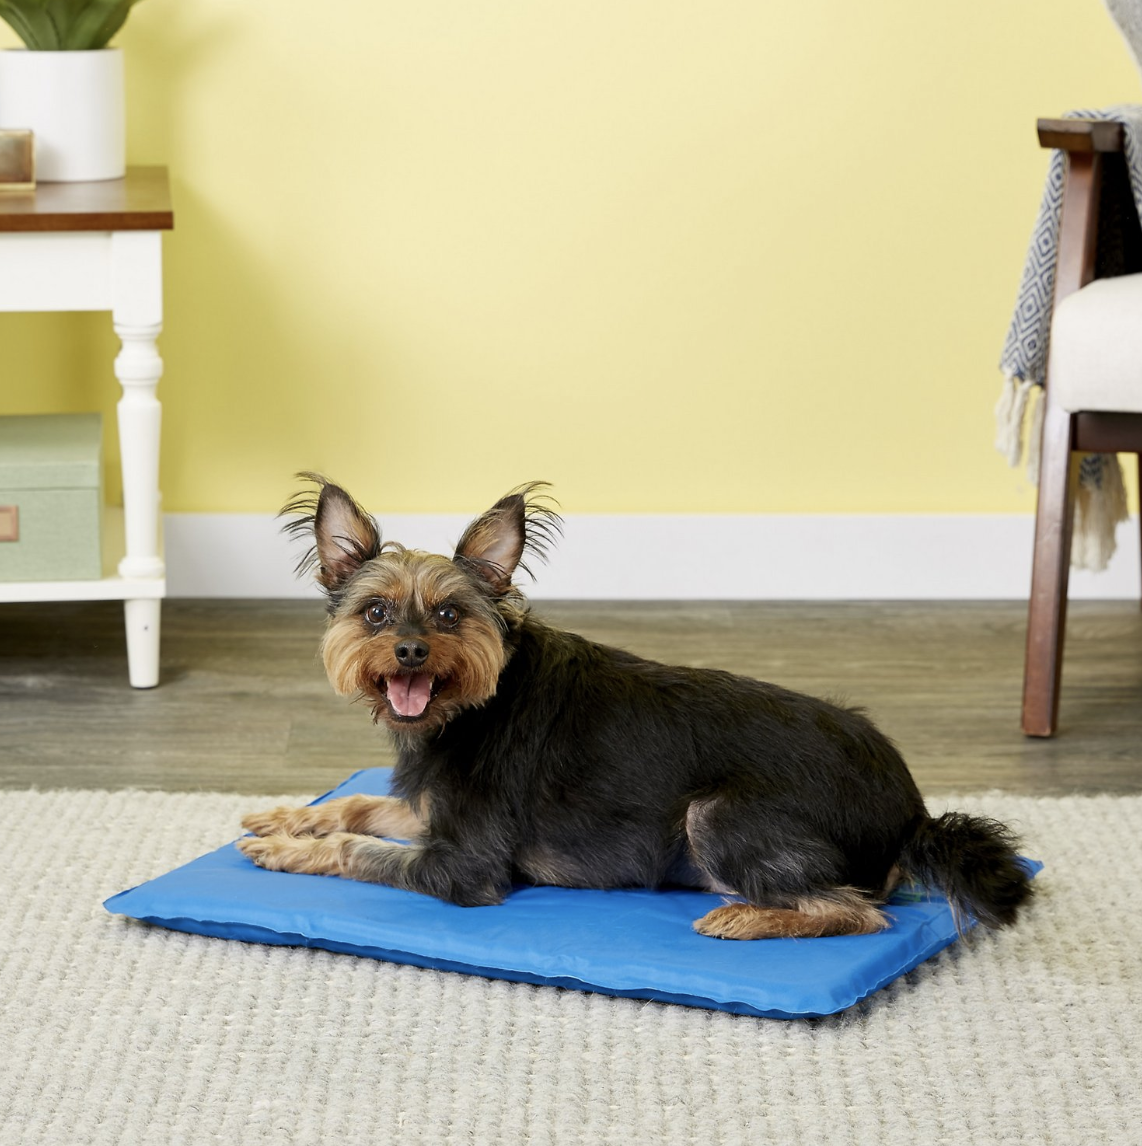 dog bed cooling mat